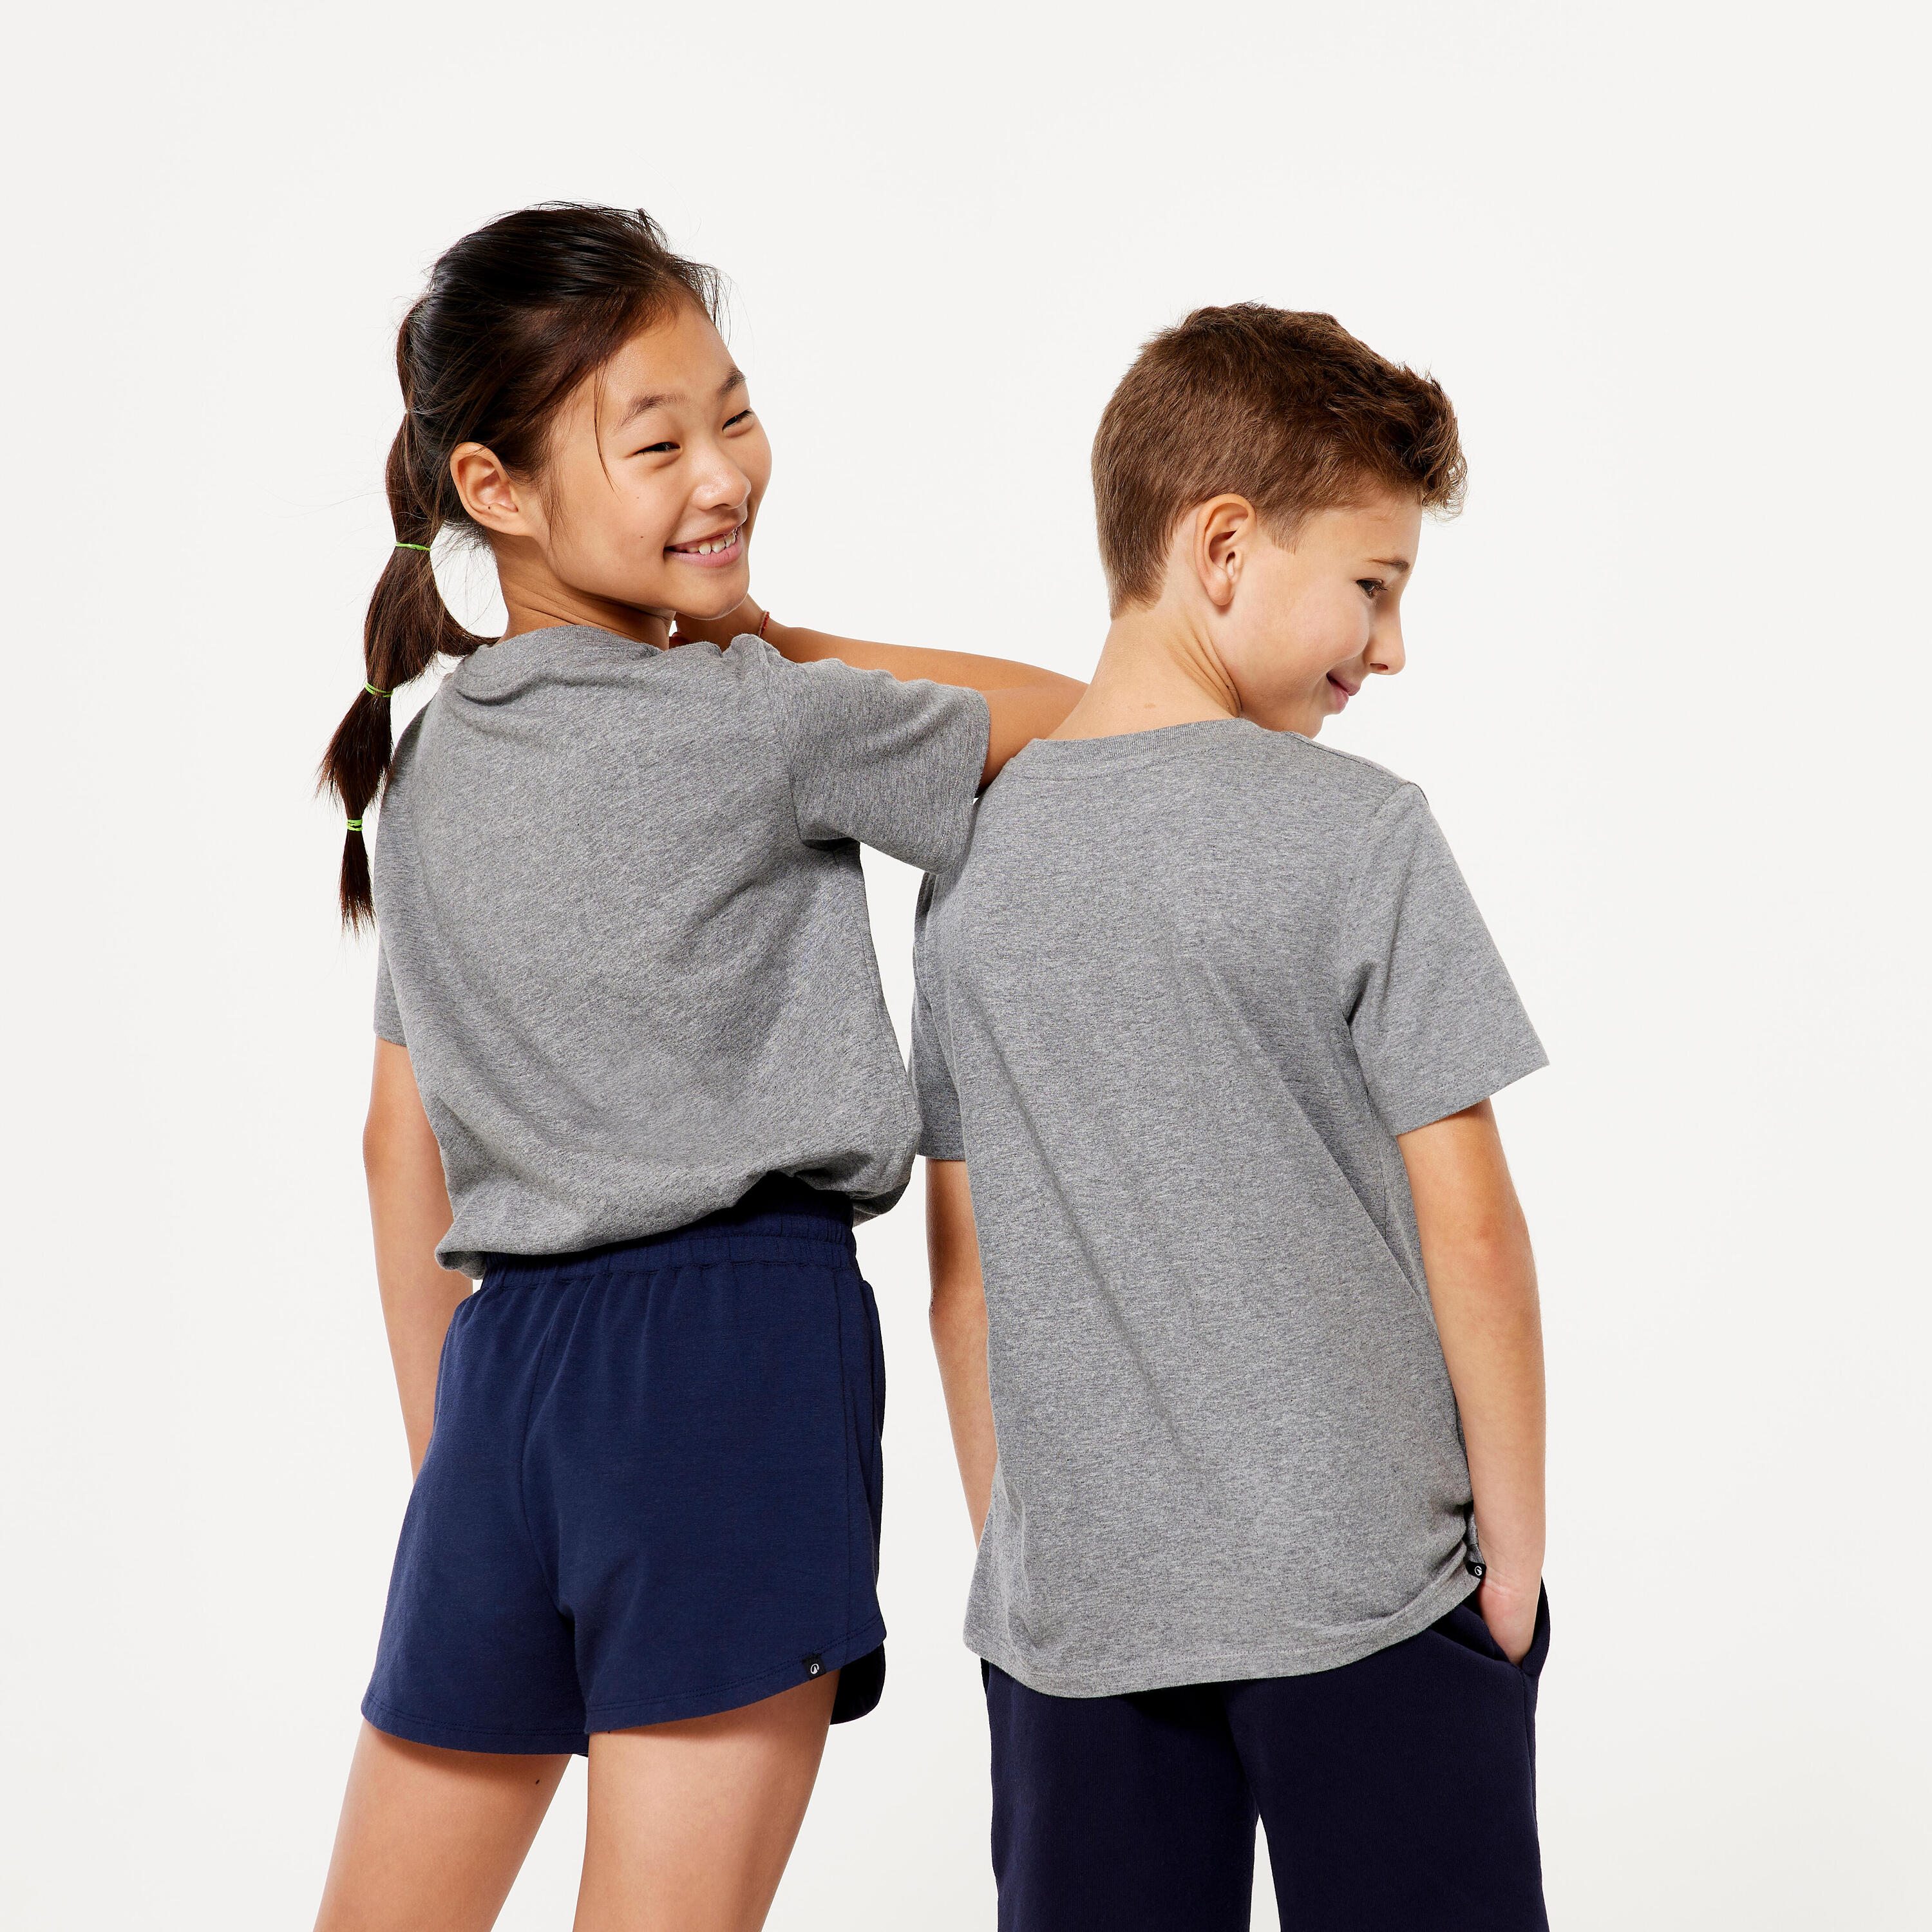 Kids' Unisex Cotton T-Shirt - Grey 1/6